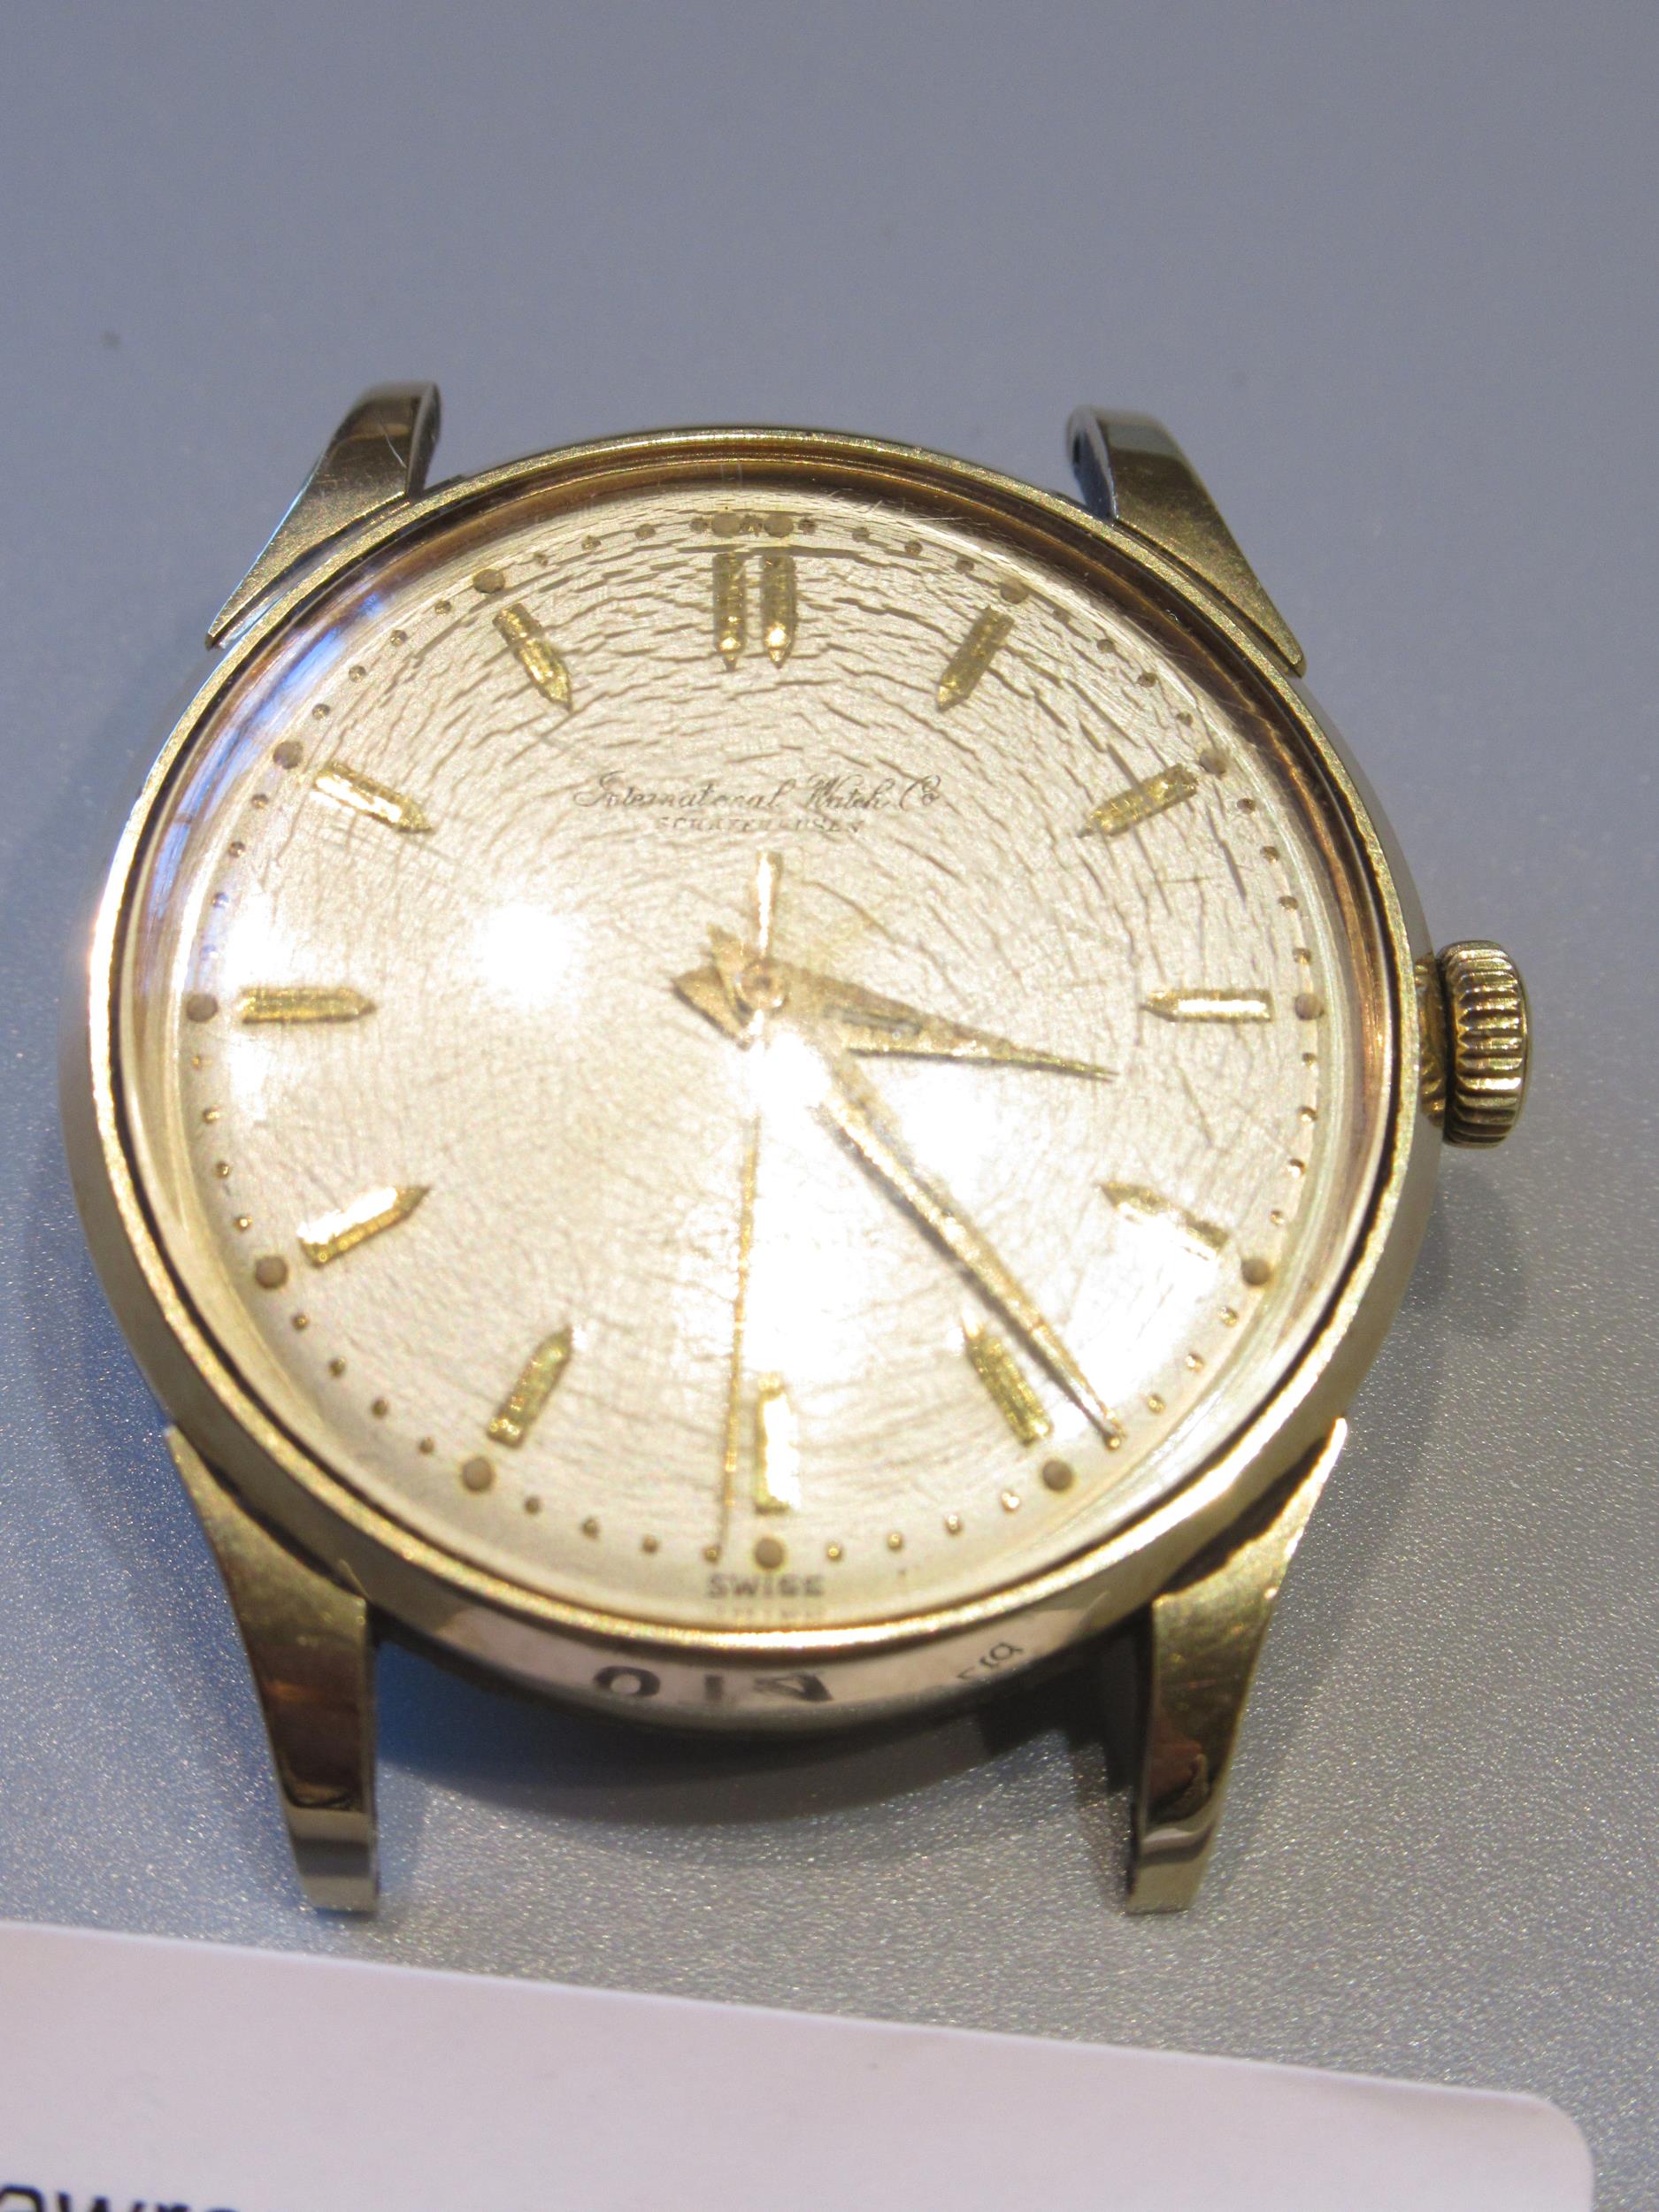 International Watch Company Schaffhausen, gentleman's gold plated automatic wrist watch, the 31mm - Image 2 of 3